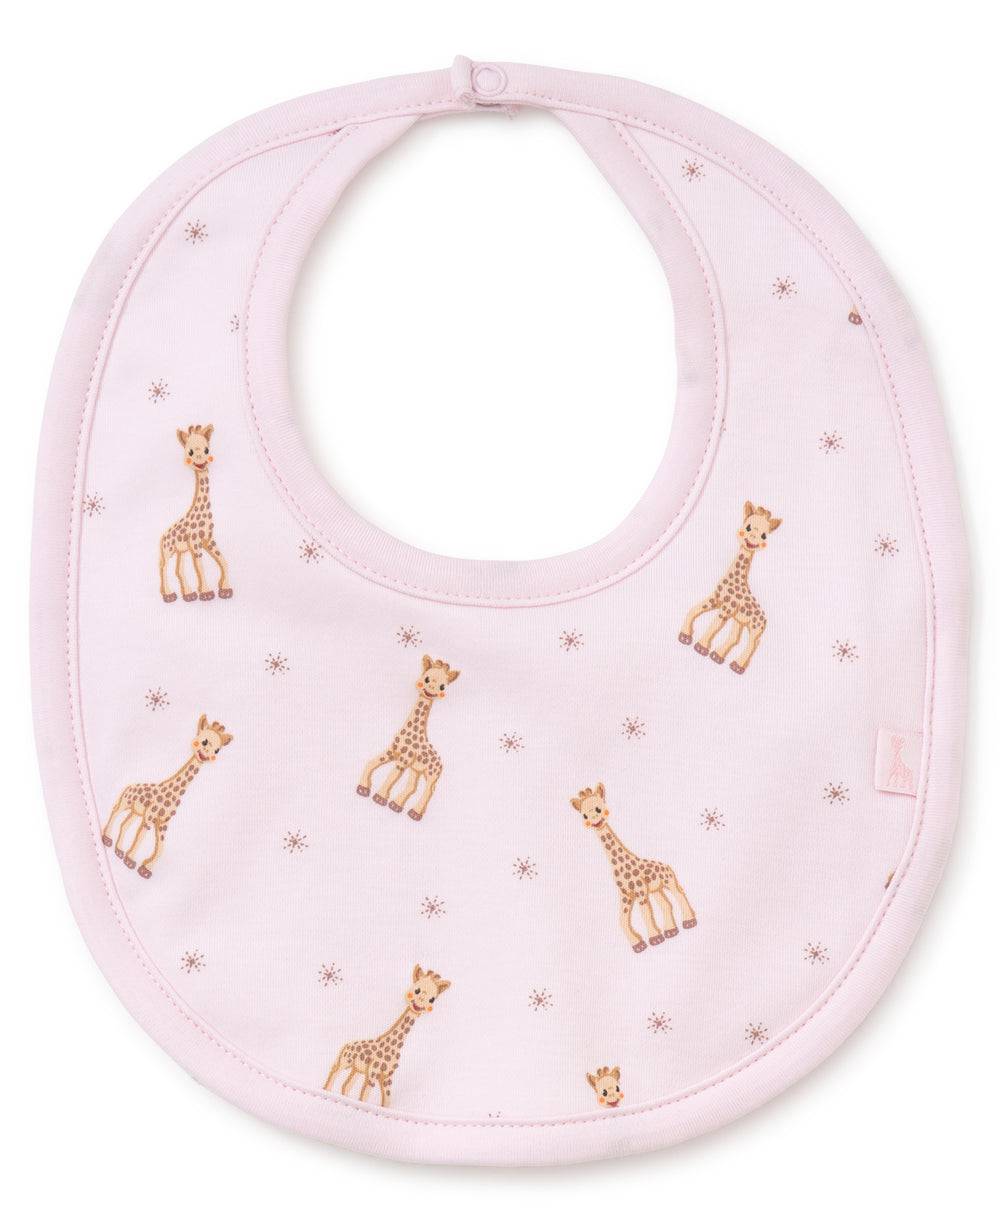 Kissy Kissy - Bib - Sophie la girafe - Pink - Findlay Rowe Designs